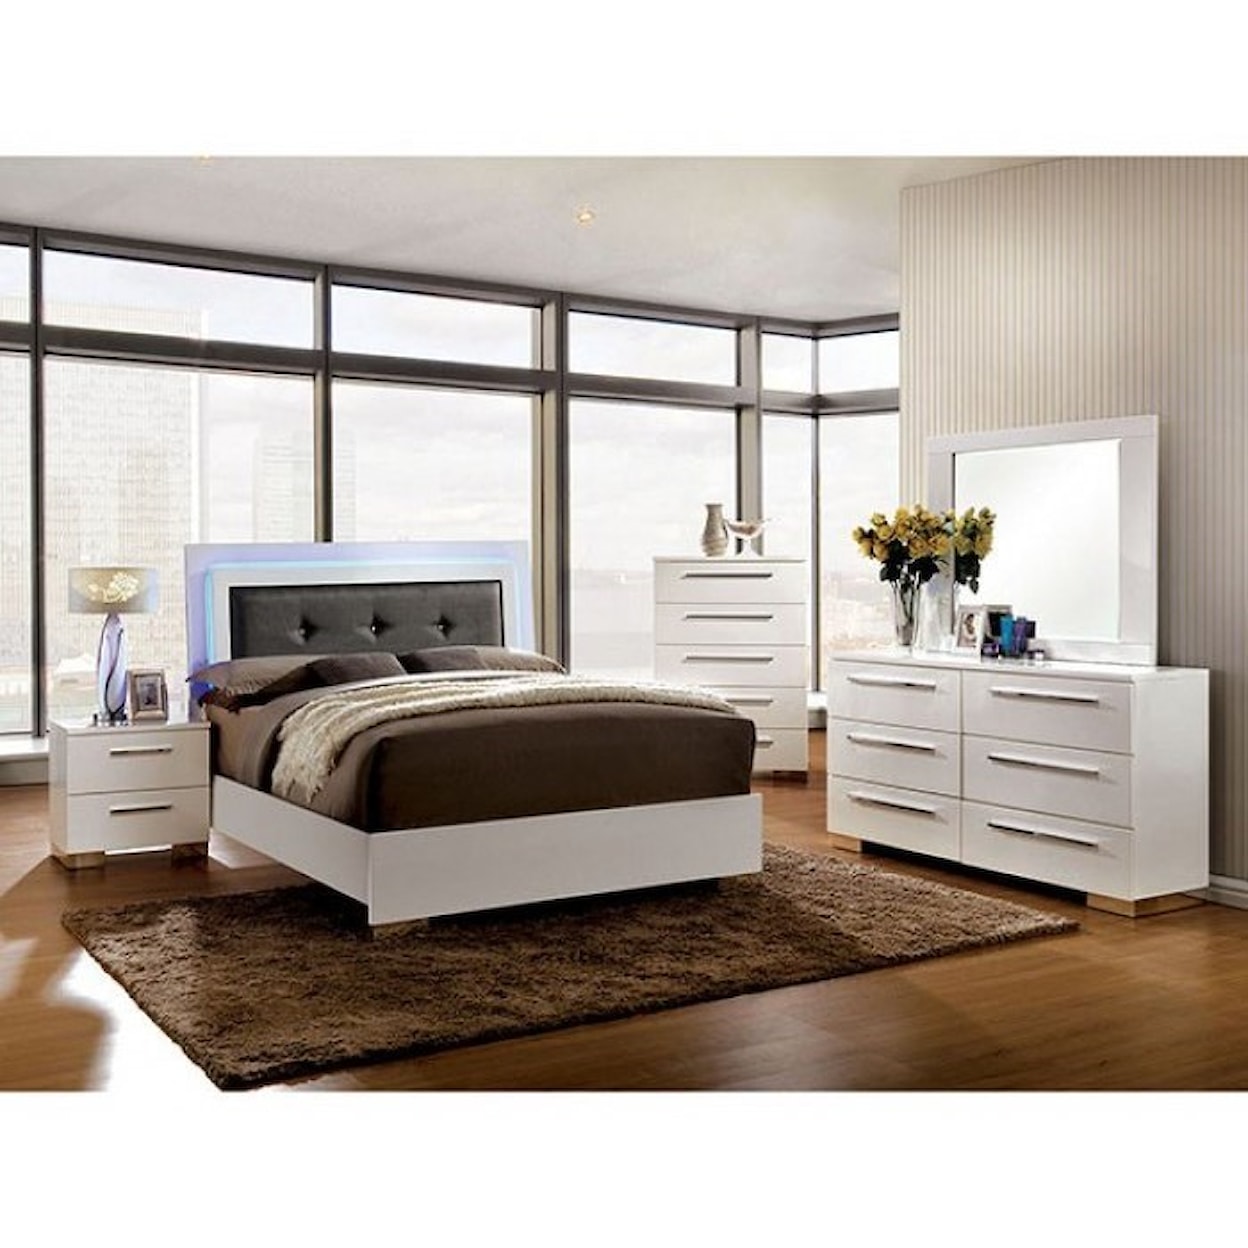 Furniture of America Clementine Queen Bedroom Group